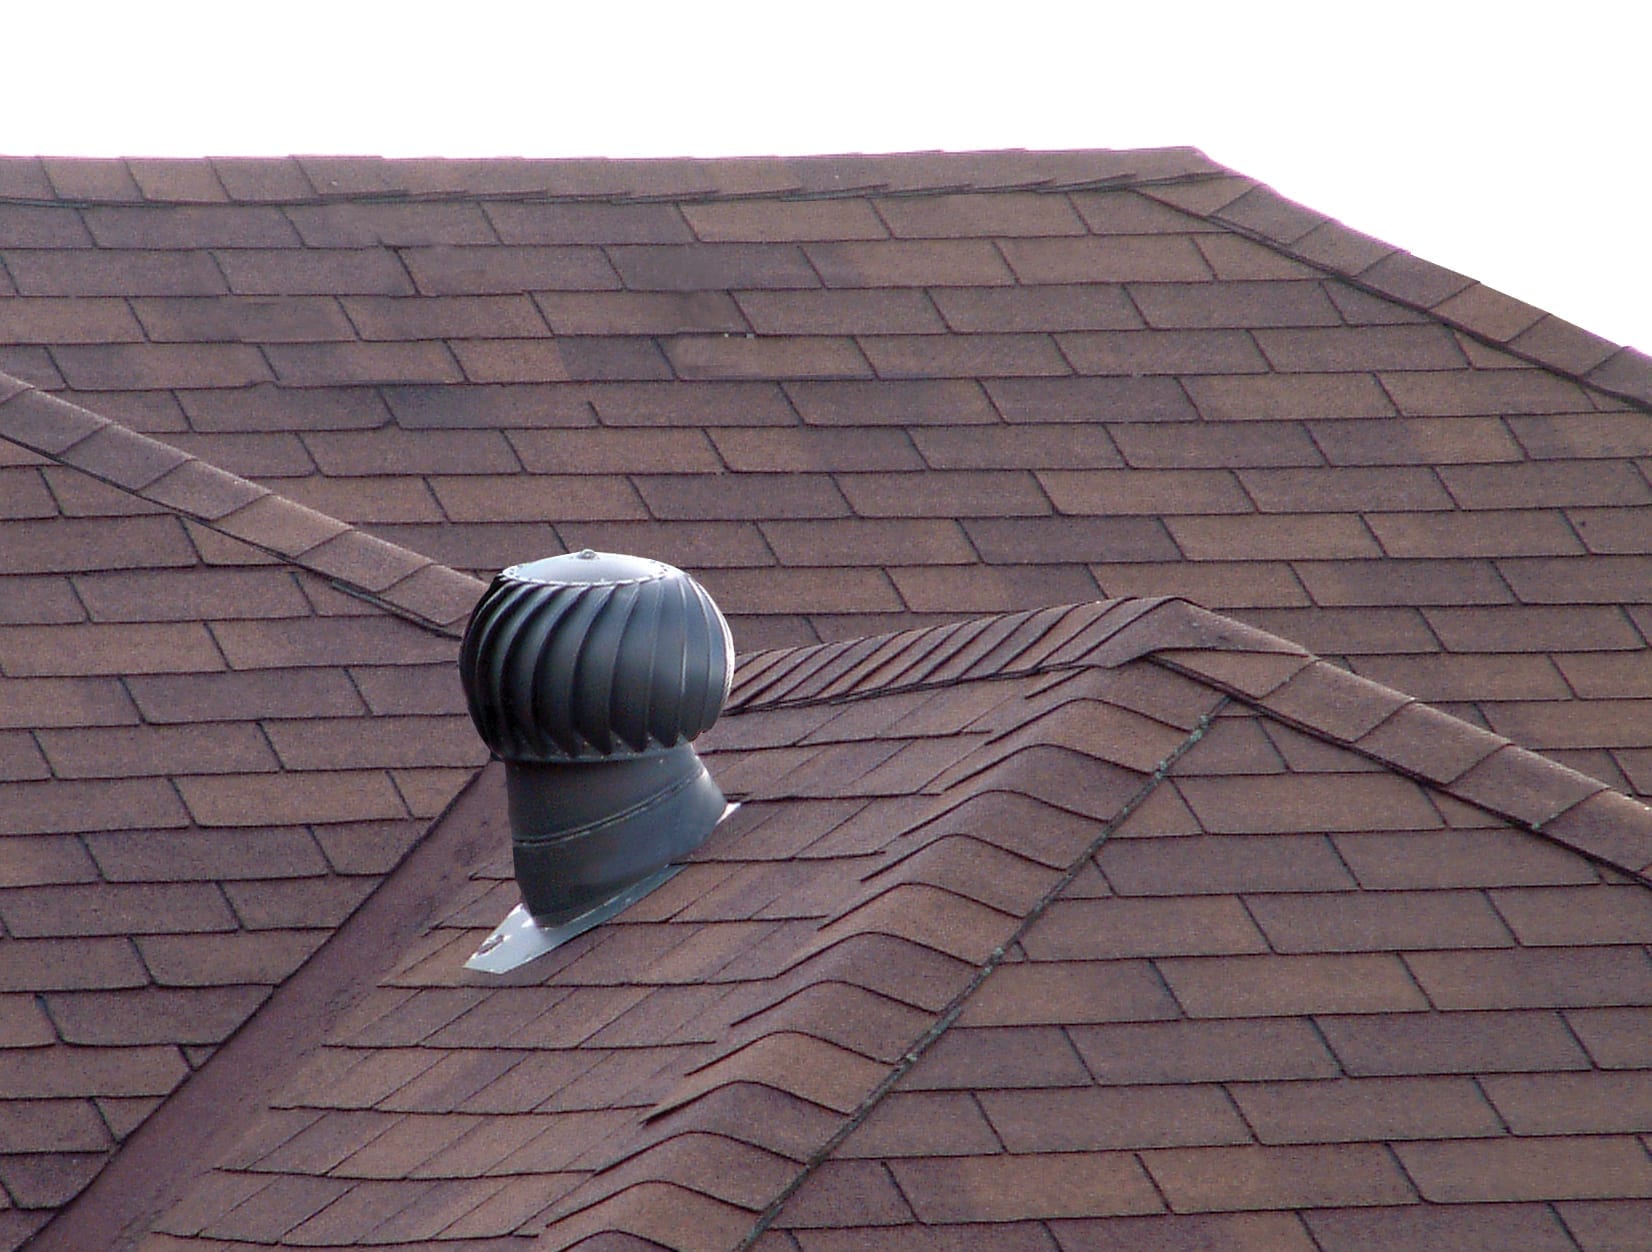 turbine vent on a roof